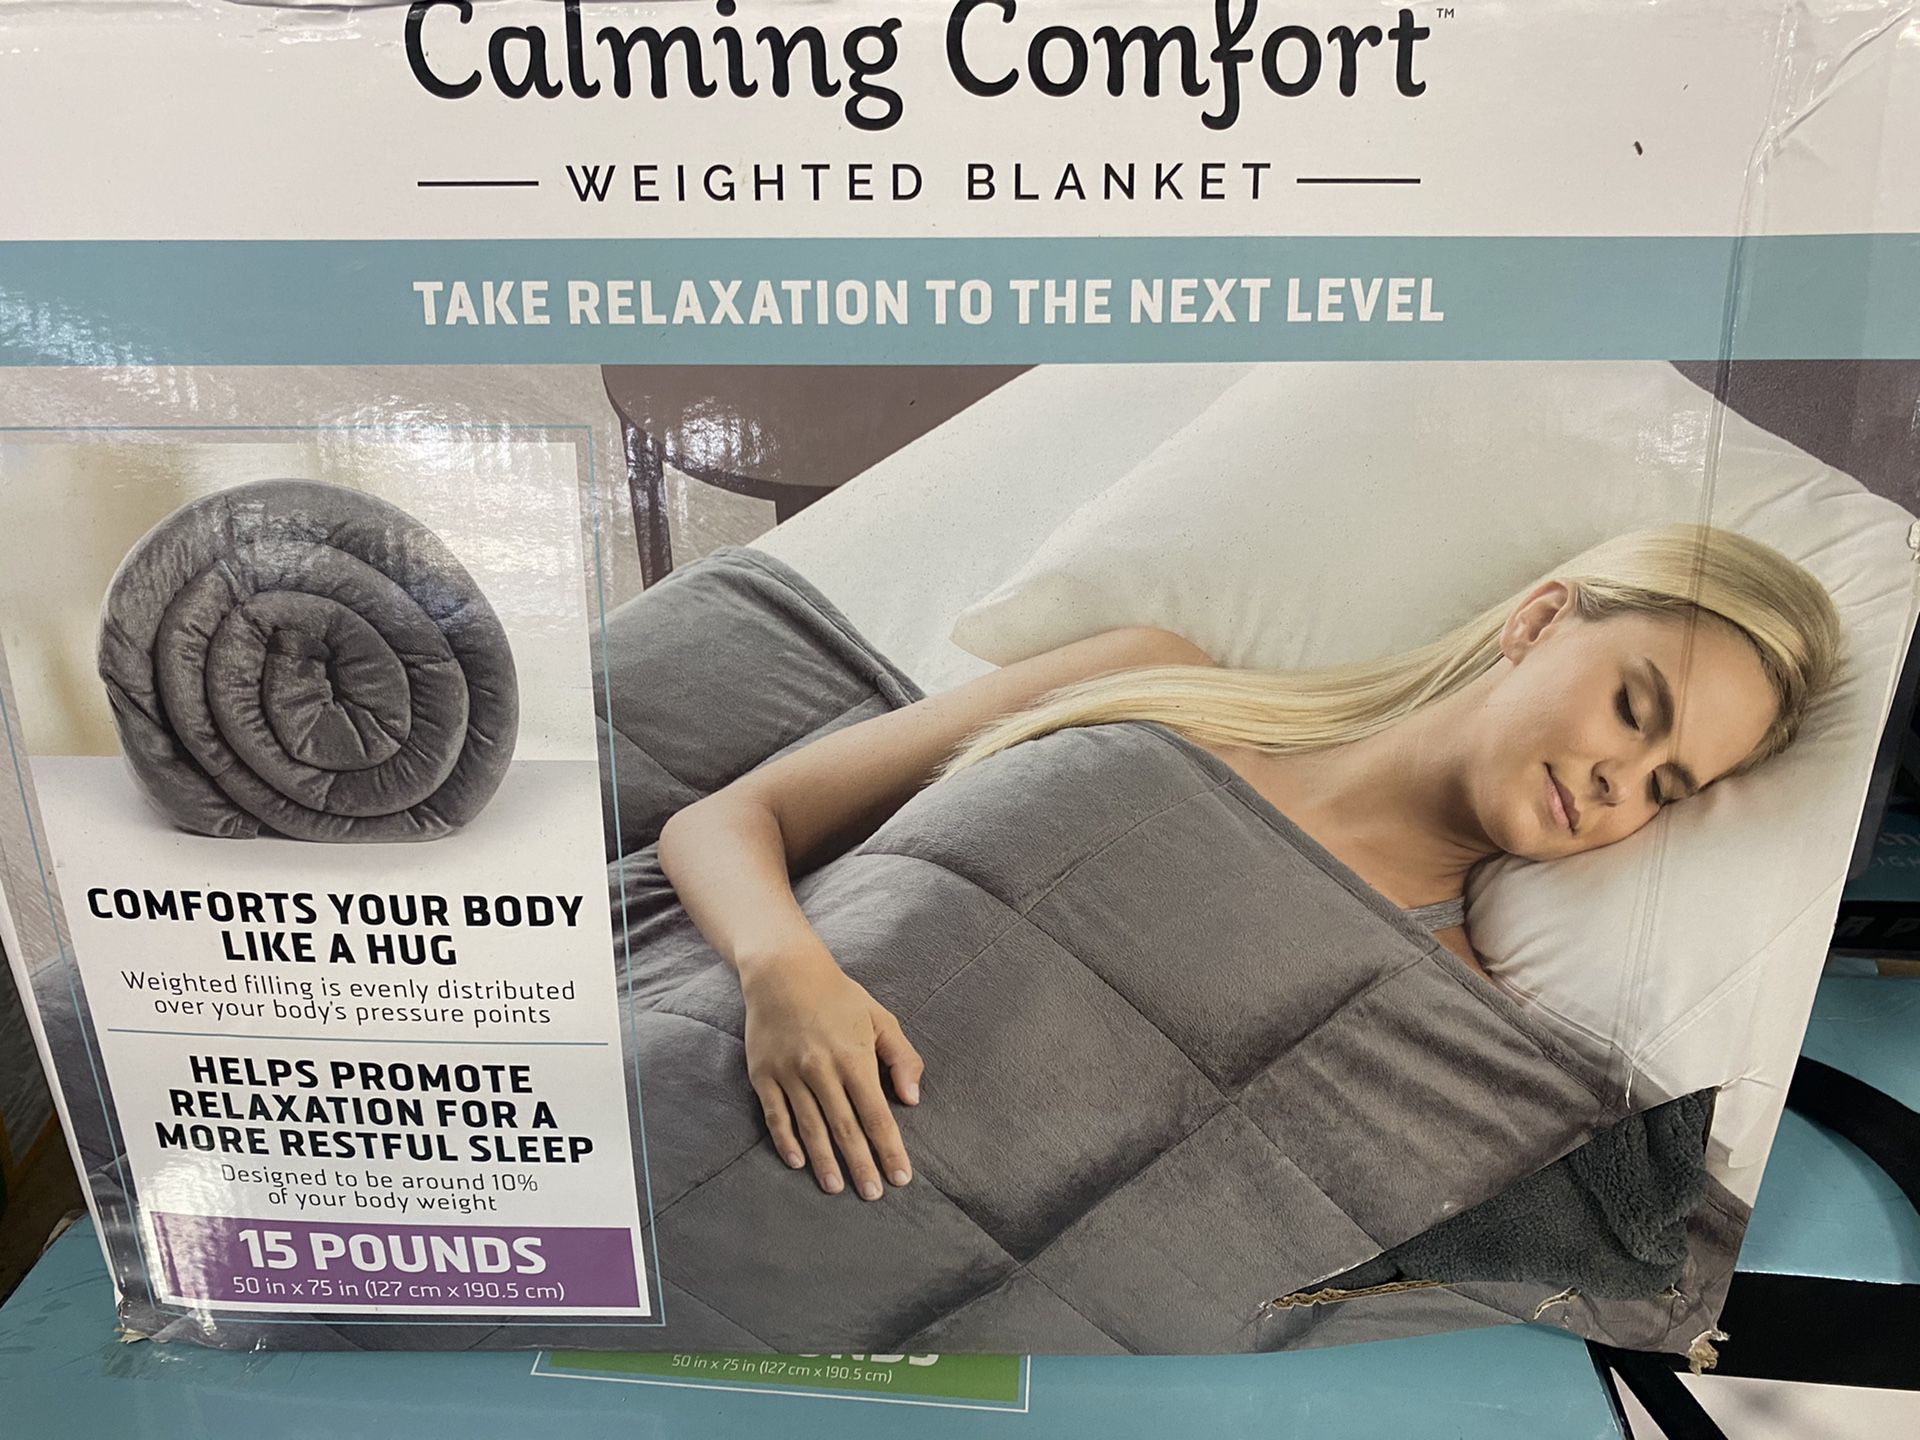 Calmimg Comfort weighted blanket